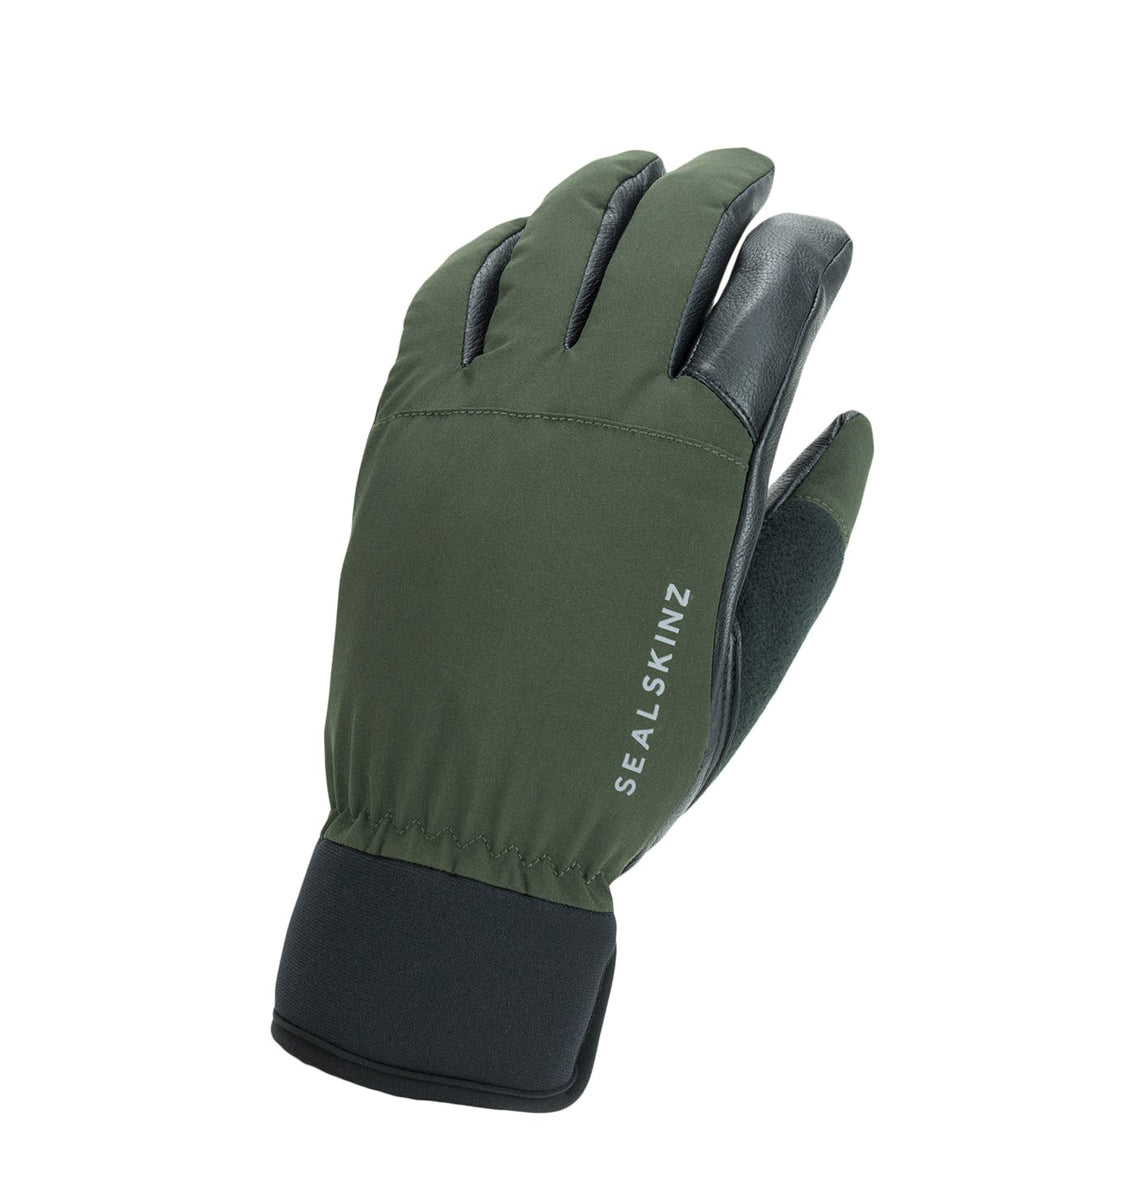 Sealskinz Waterproof All weather Camo Sporting Gloves 